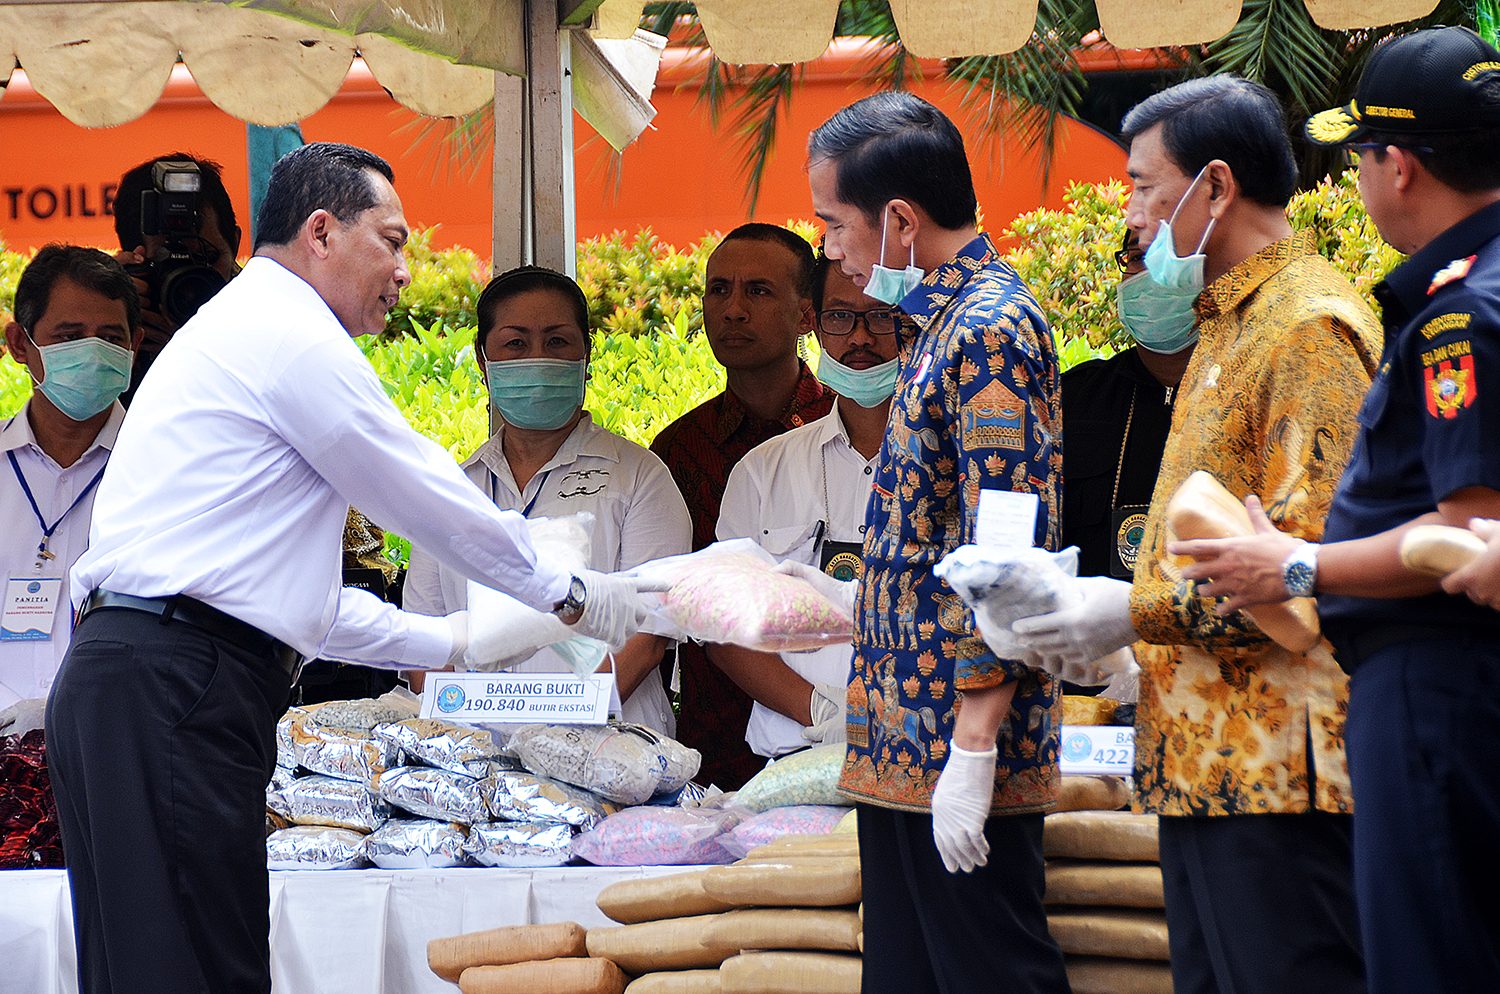 Kepala BNN Budi Waseso menunjukkan barang bukti narkoba yang akan dimusnahkan kepada Presiden Jokowi, di lapangan Silang Monas, Jakarta, pada 6 Desember 2016. Foto dari Setkab.go.id 